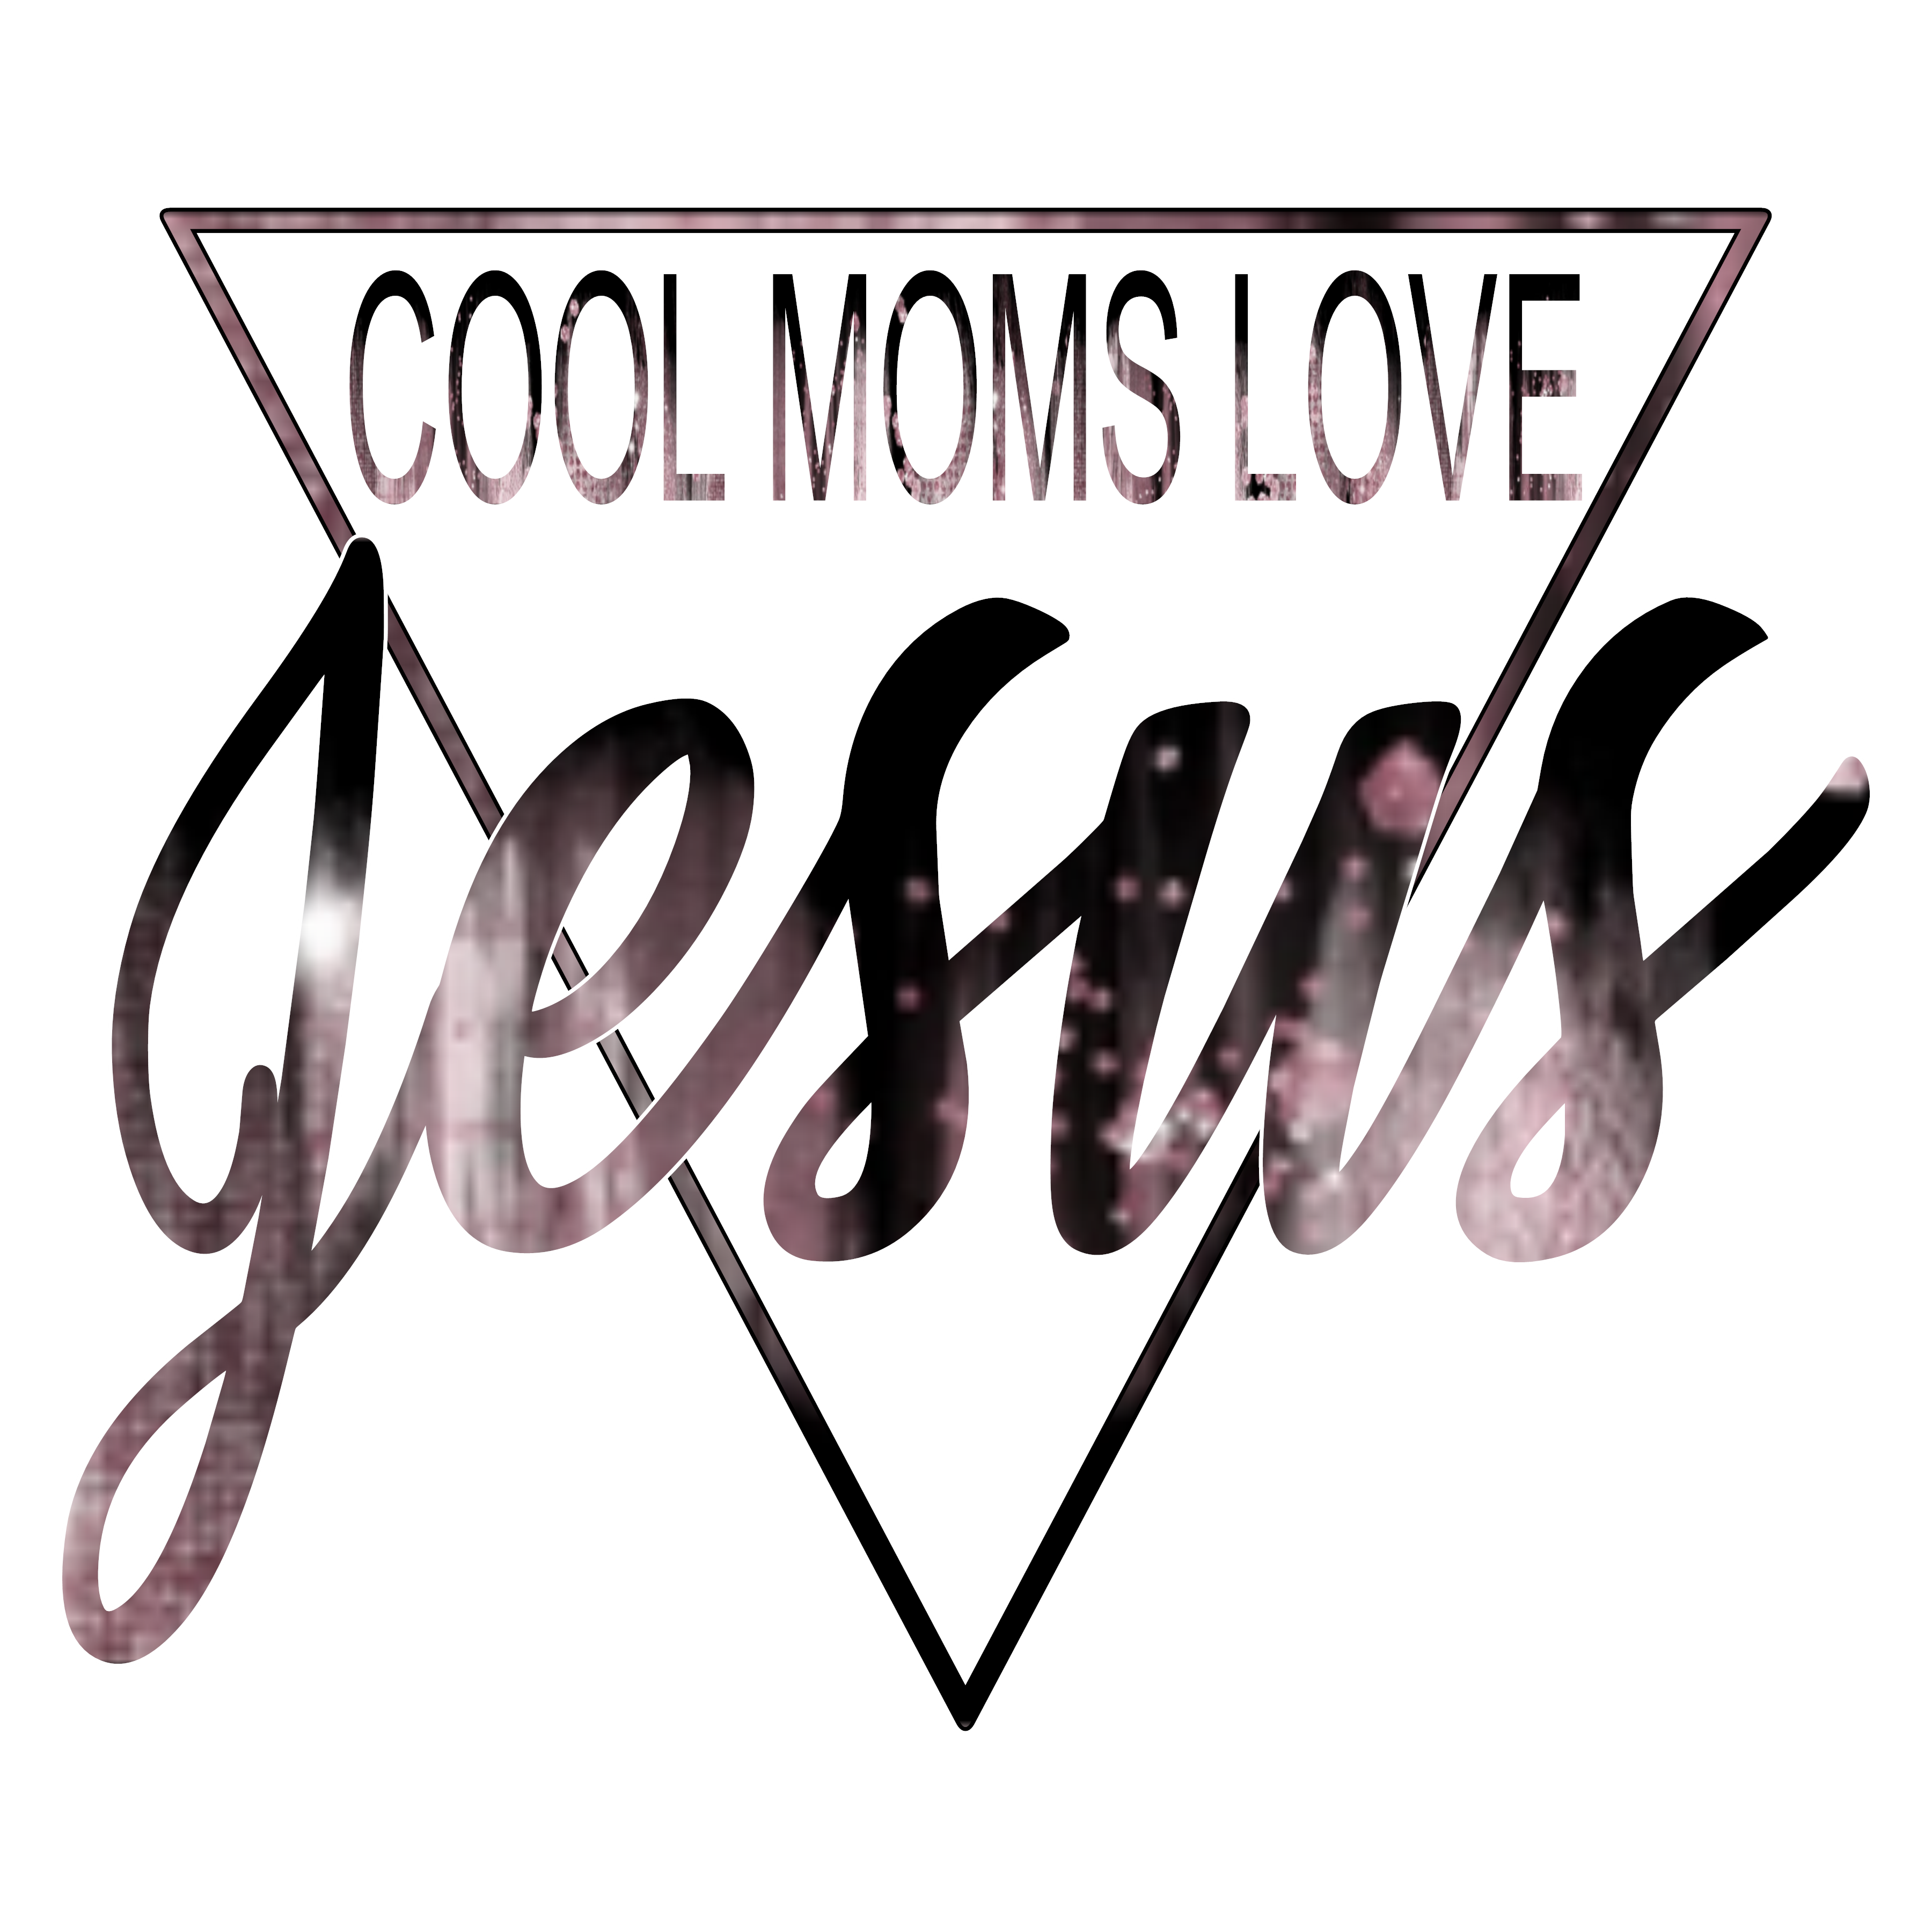 Cool Moms Love Jesus